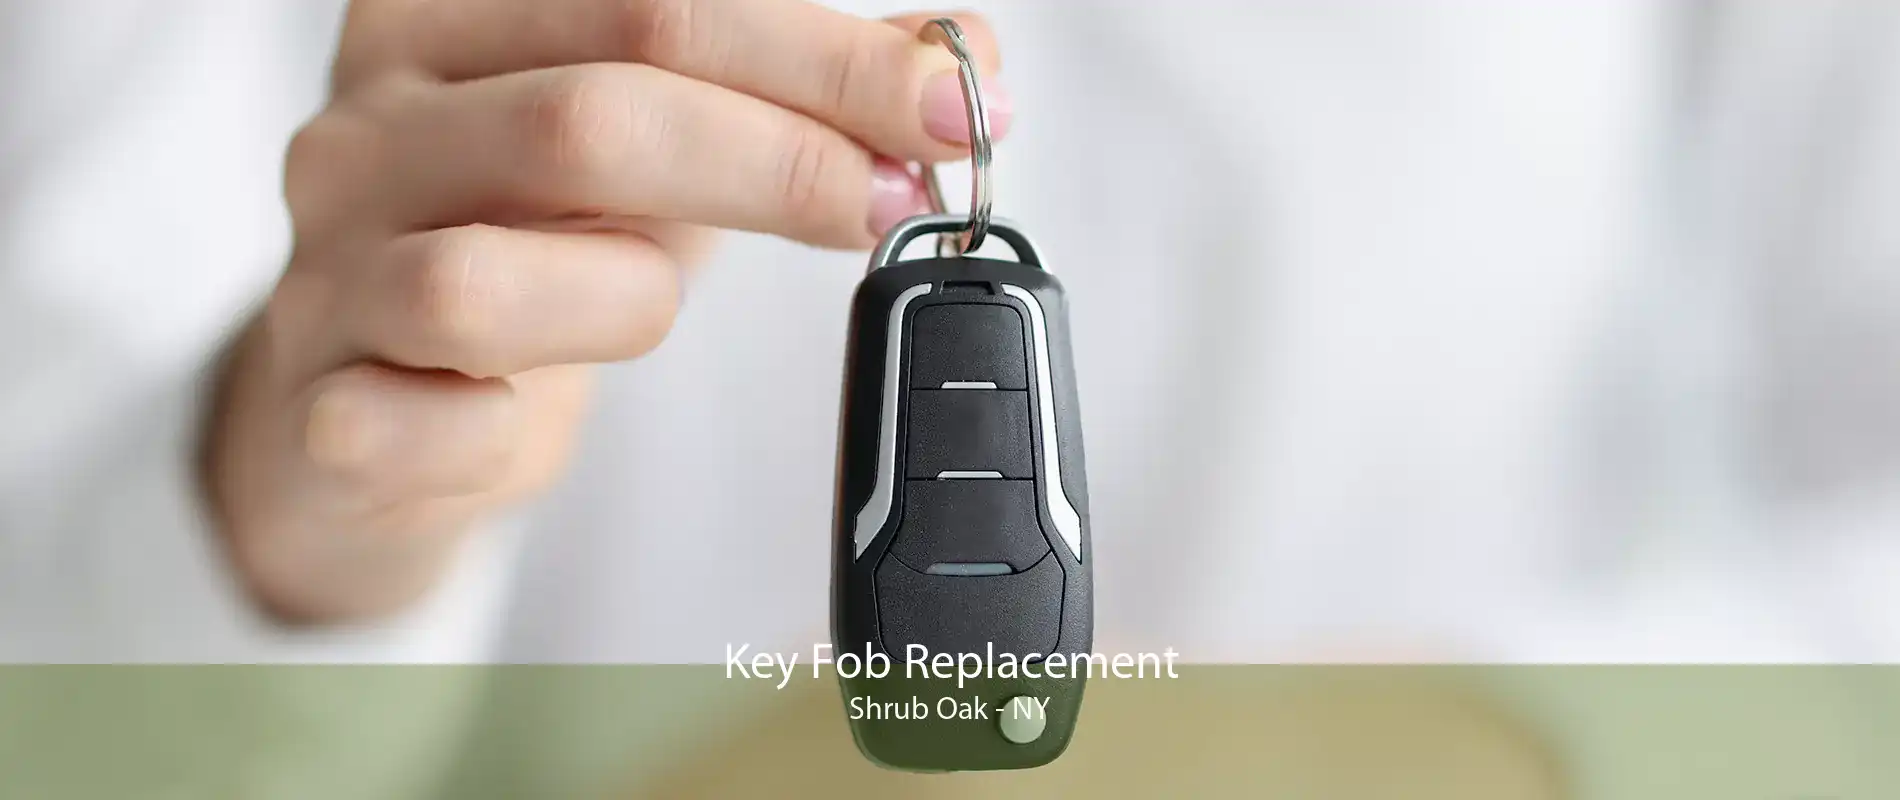 Key Fob Replacement Shrub Oak - NY